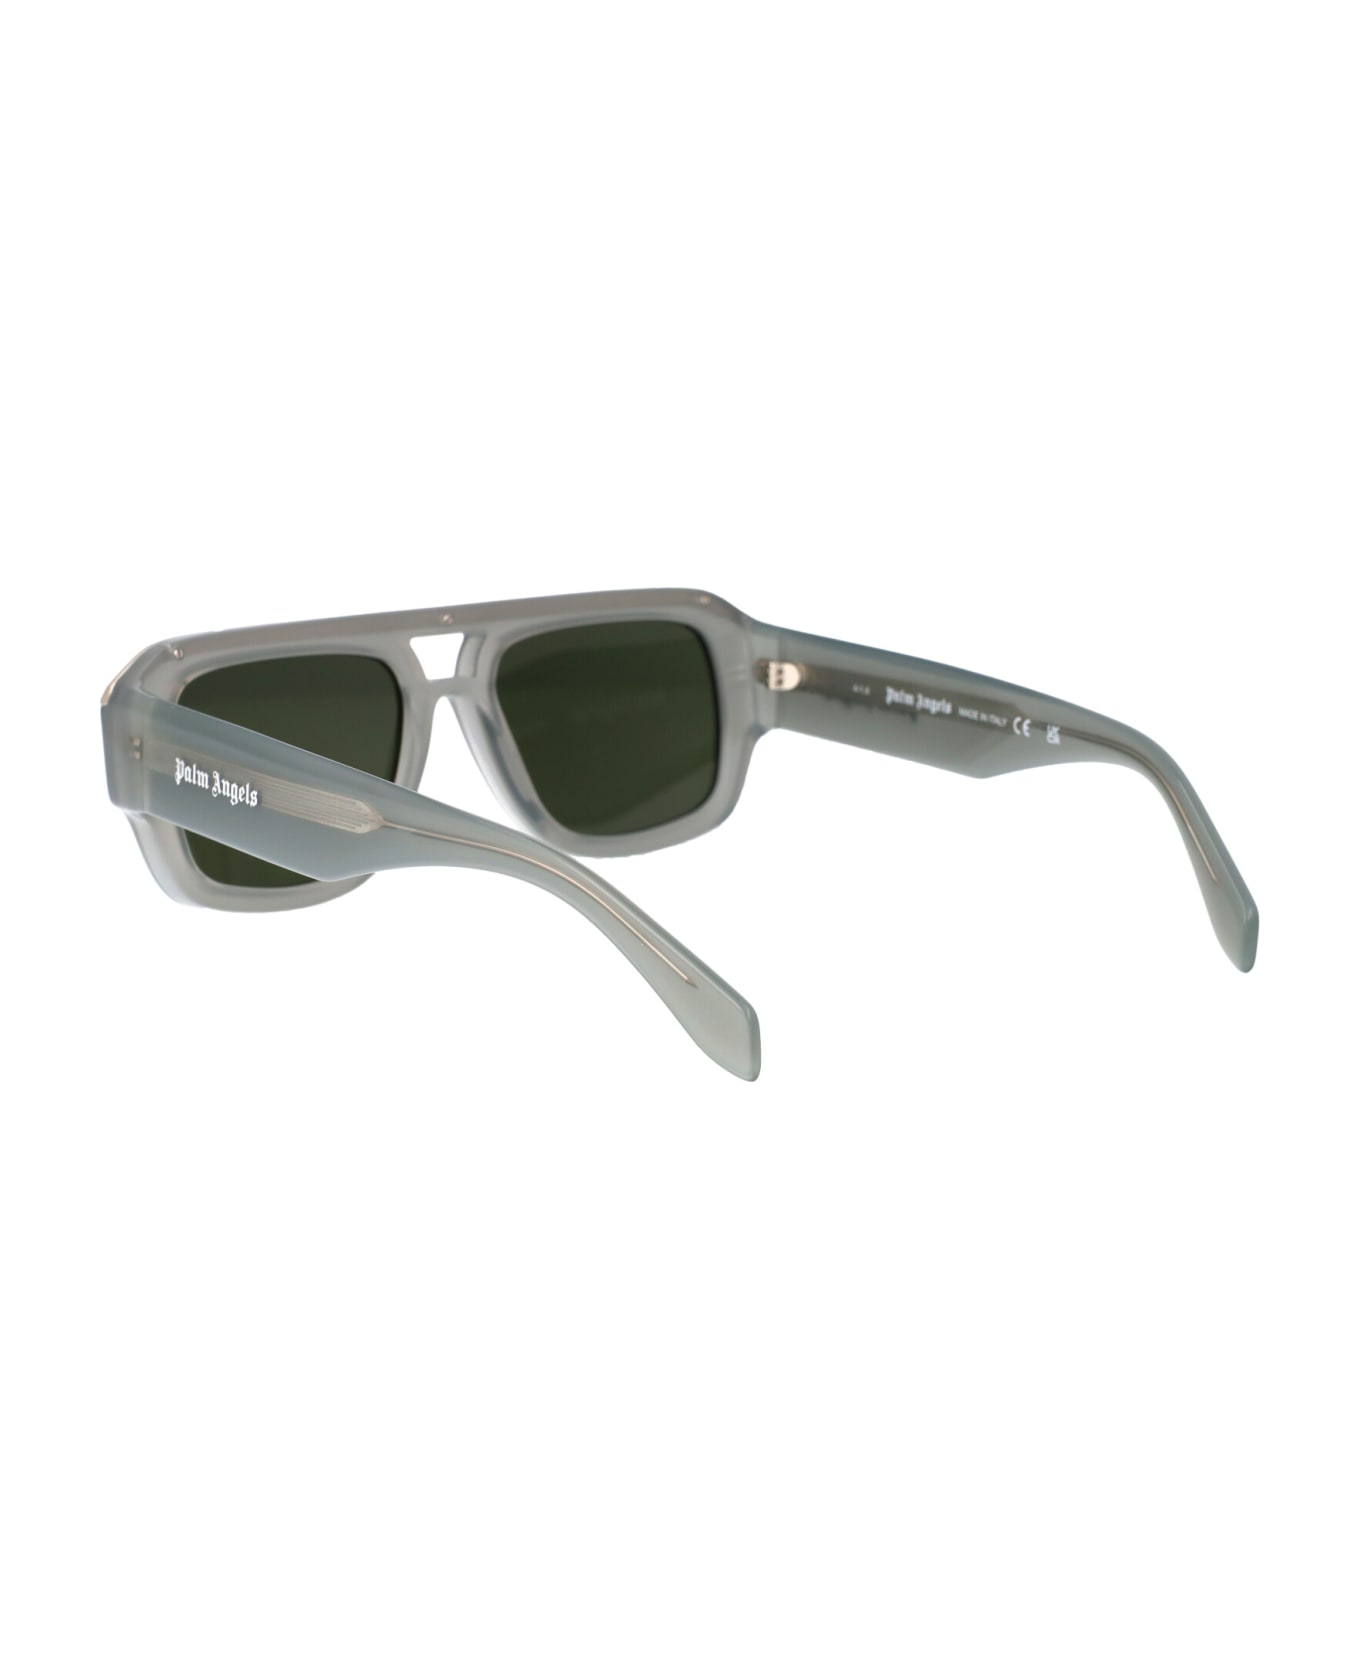 Palm Angels Stockton Sunglasses - 0955 GREY 